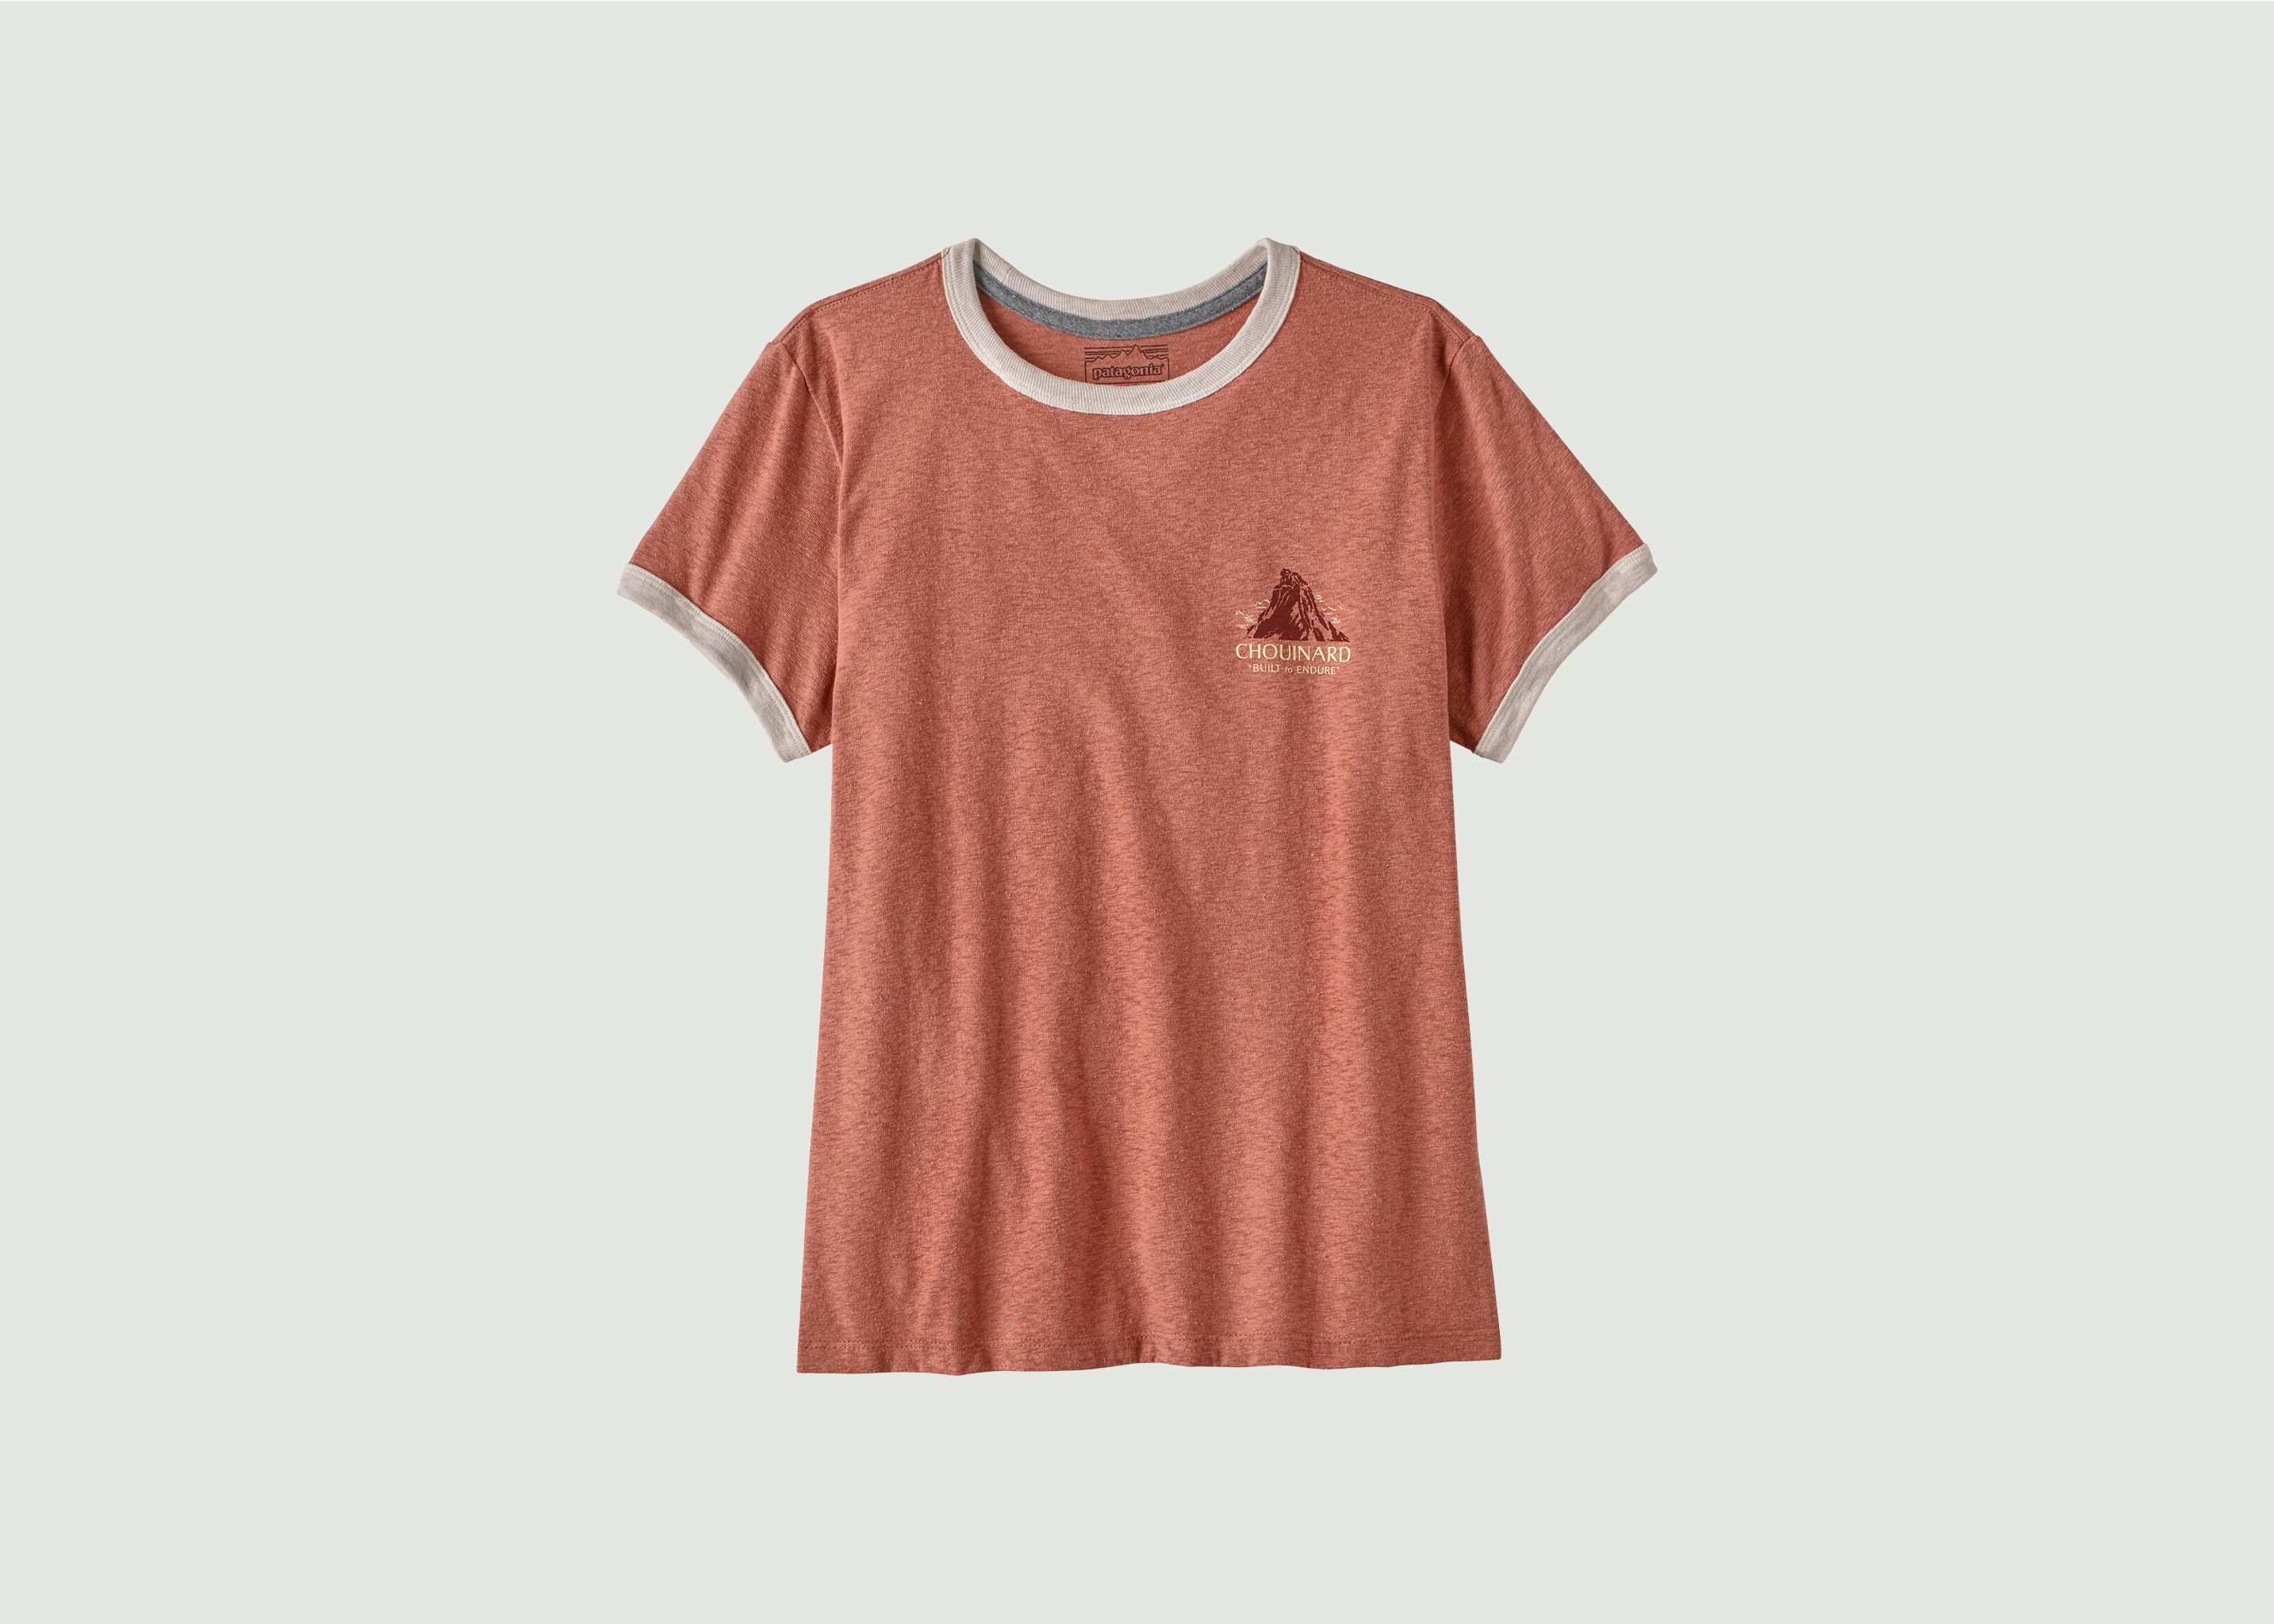 Chouinard Crest Ringer Responsibili T-shirt - Patagonia